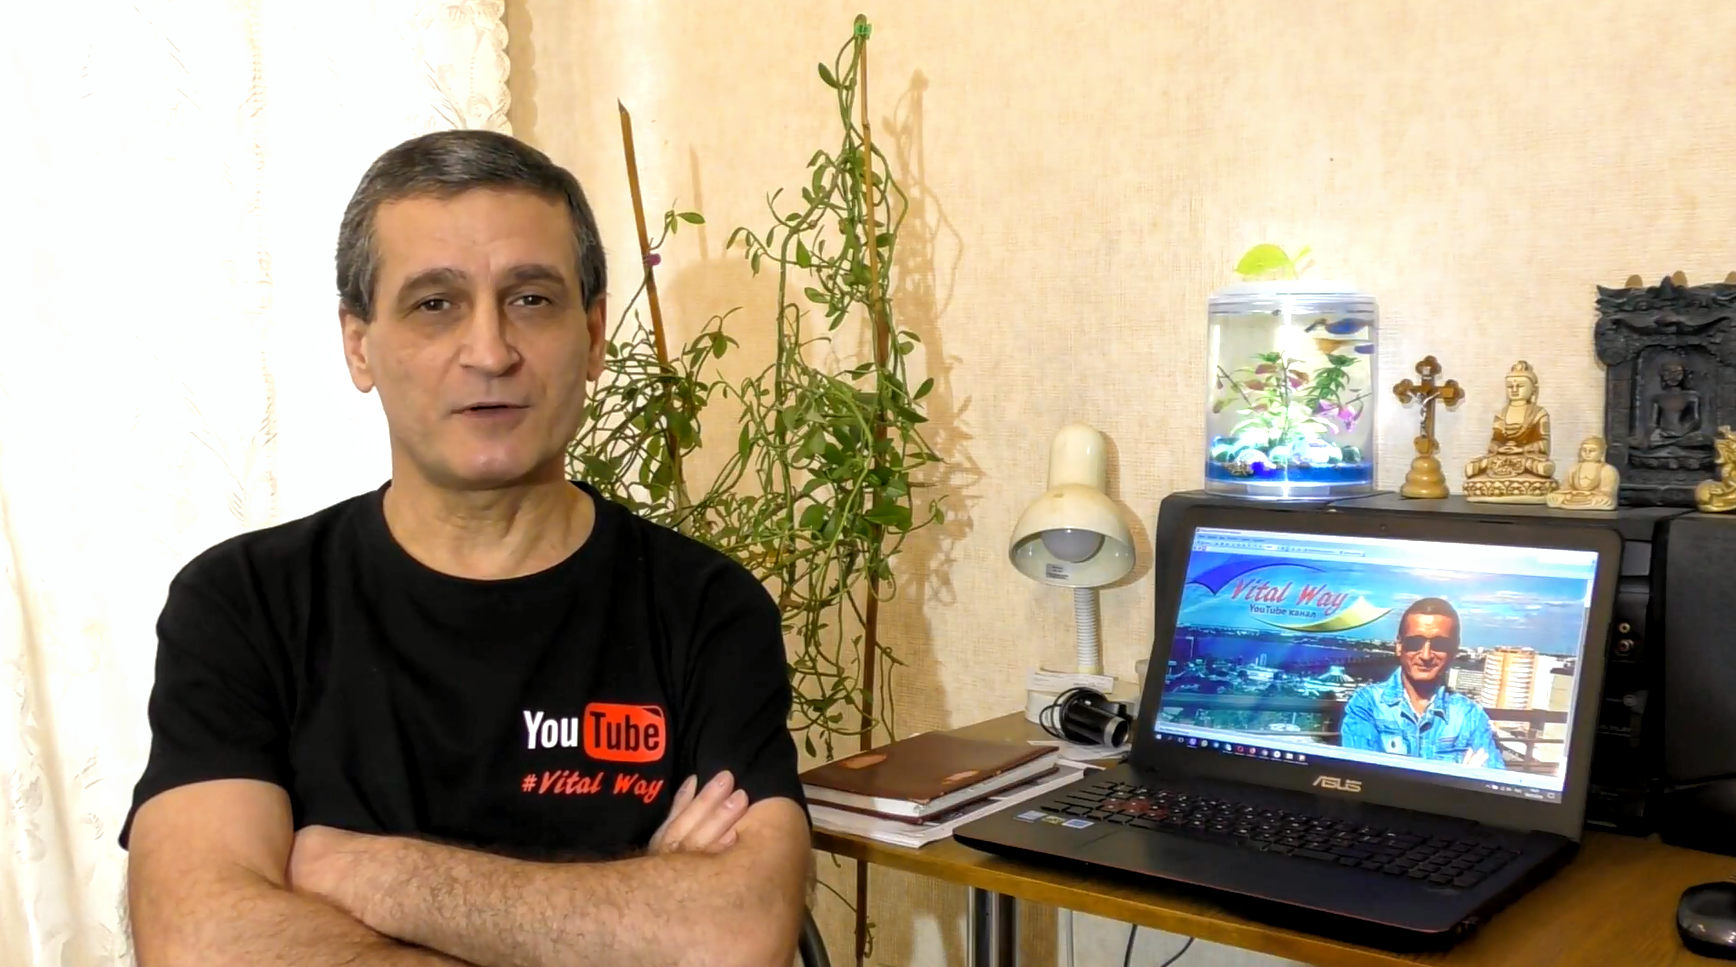 Виталий Пискун - популярный видеоблогер Украины (канал Vital Way) (42)